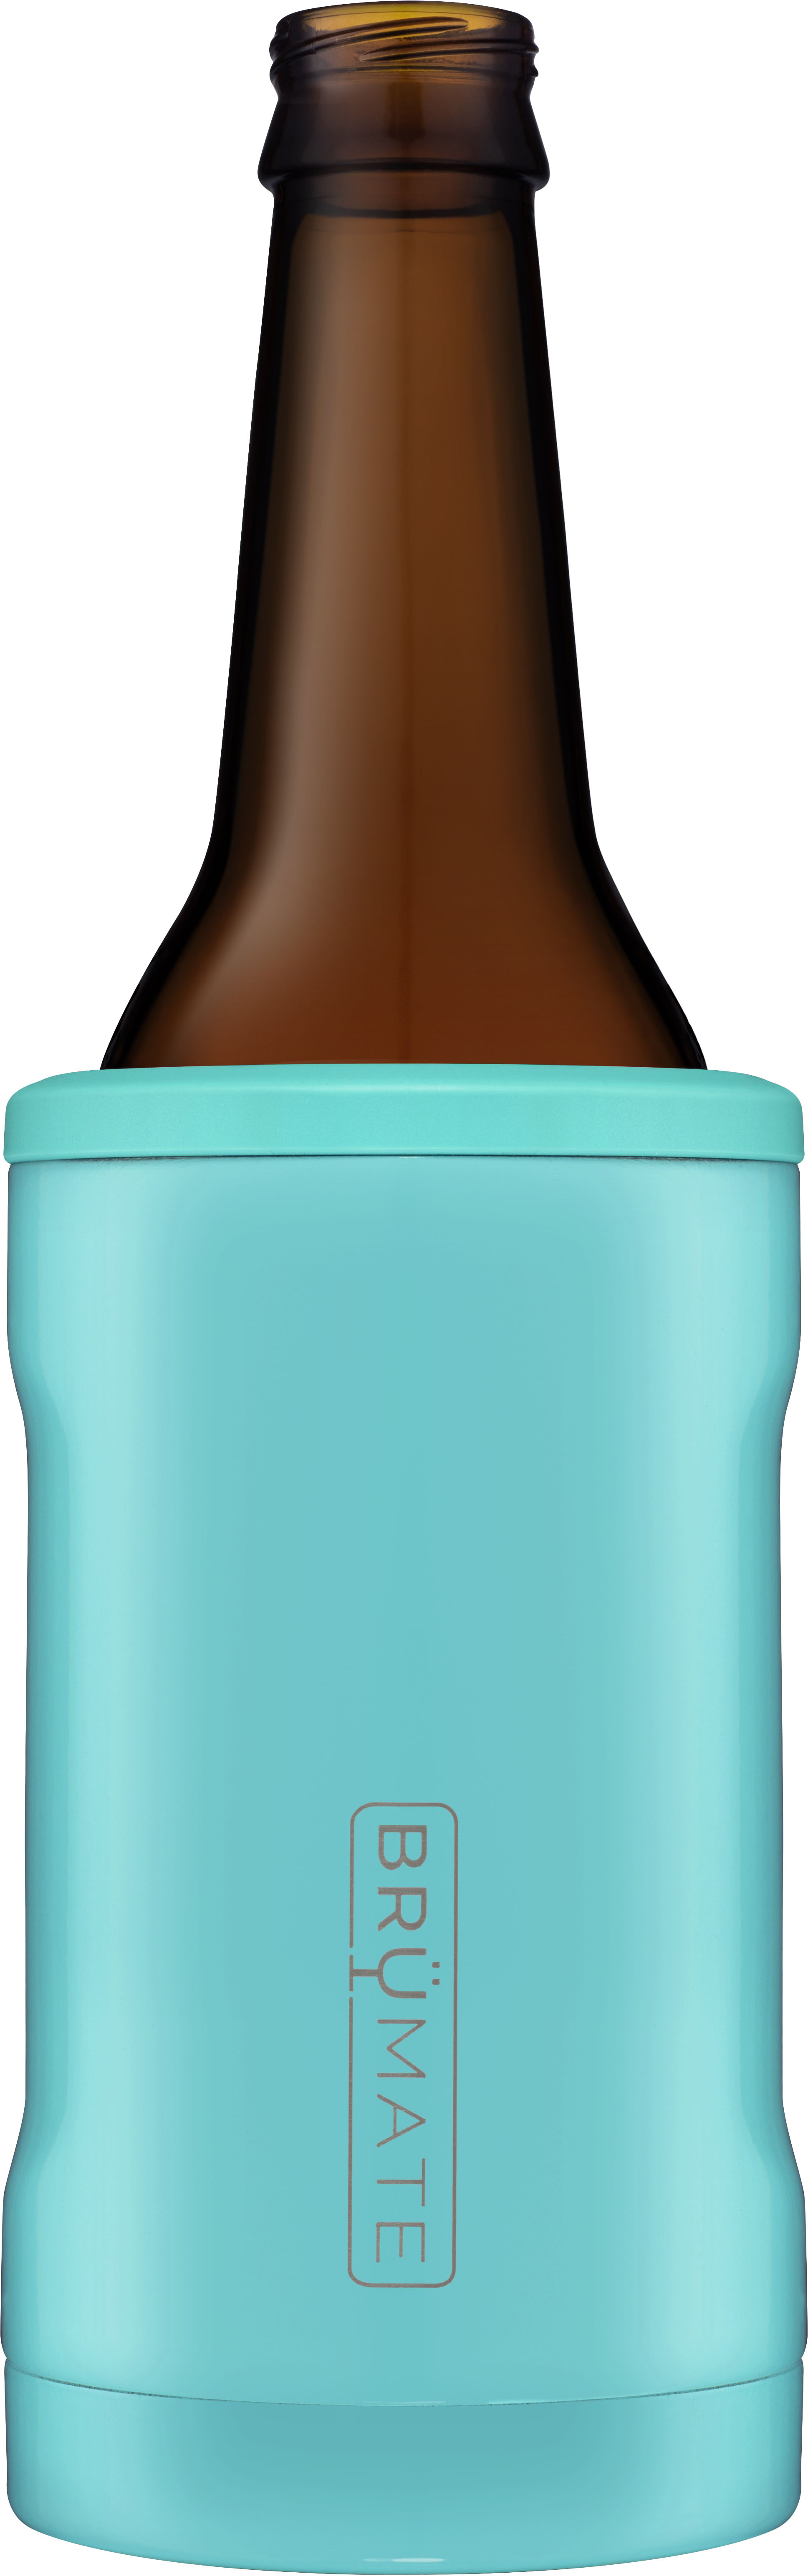 BruMate HBE12 Hopsulator Bottle - The Mercantile at Springdale